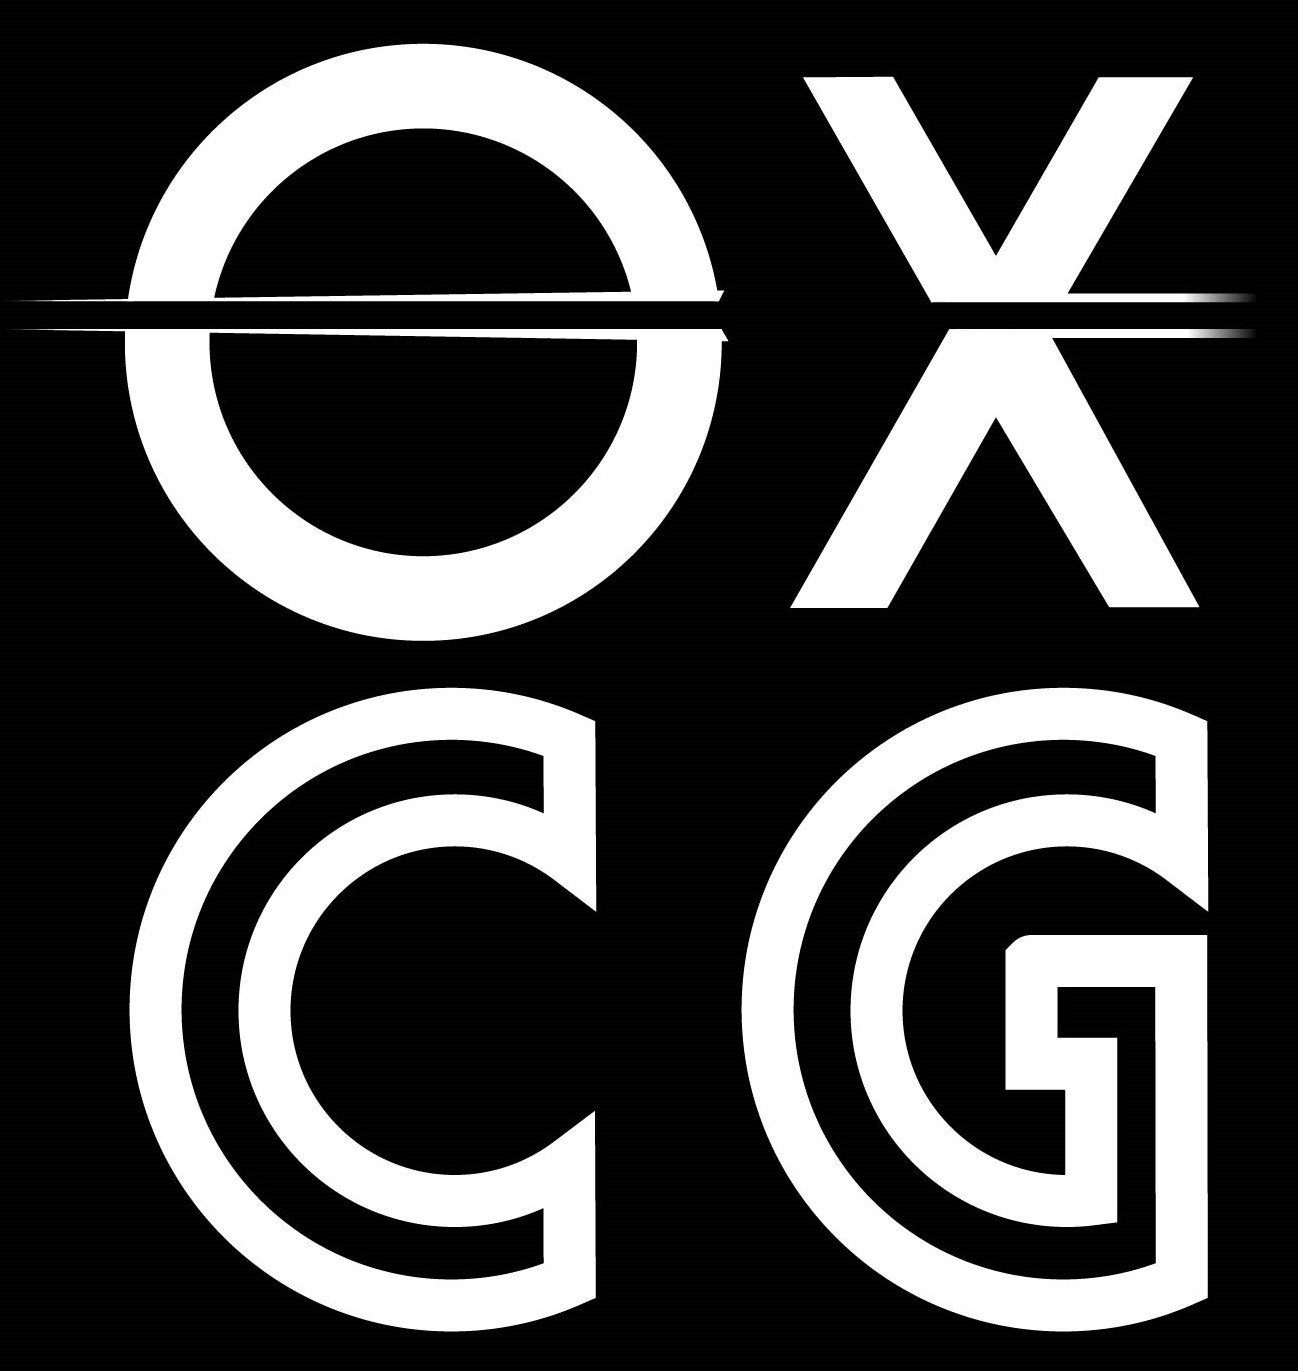 Oxford Community Gardeners - OXCG